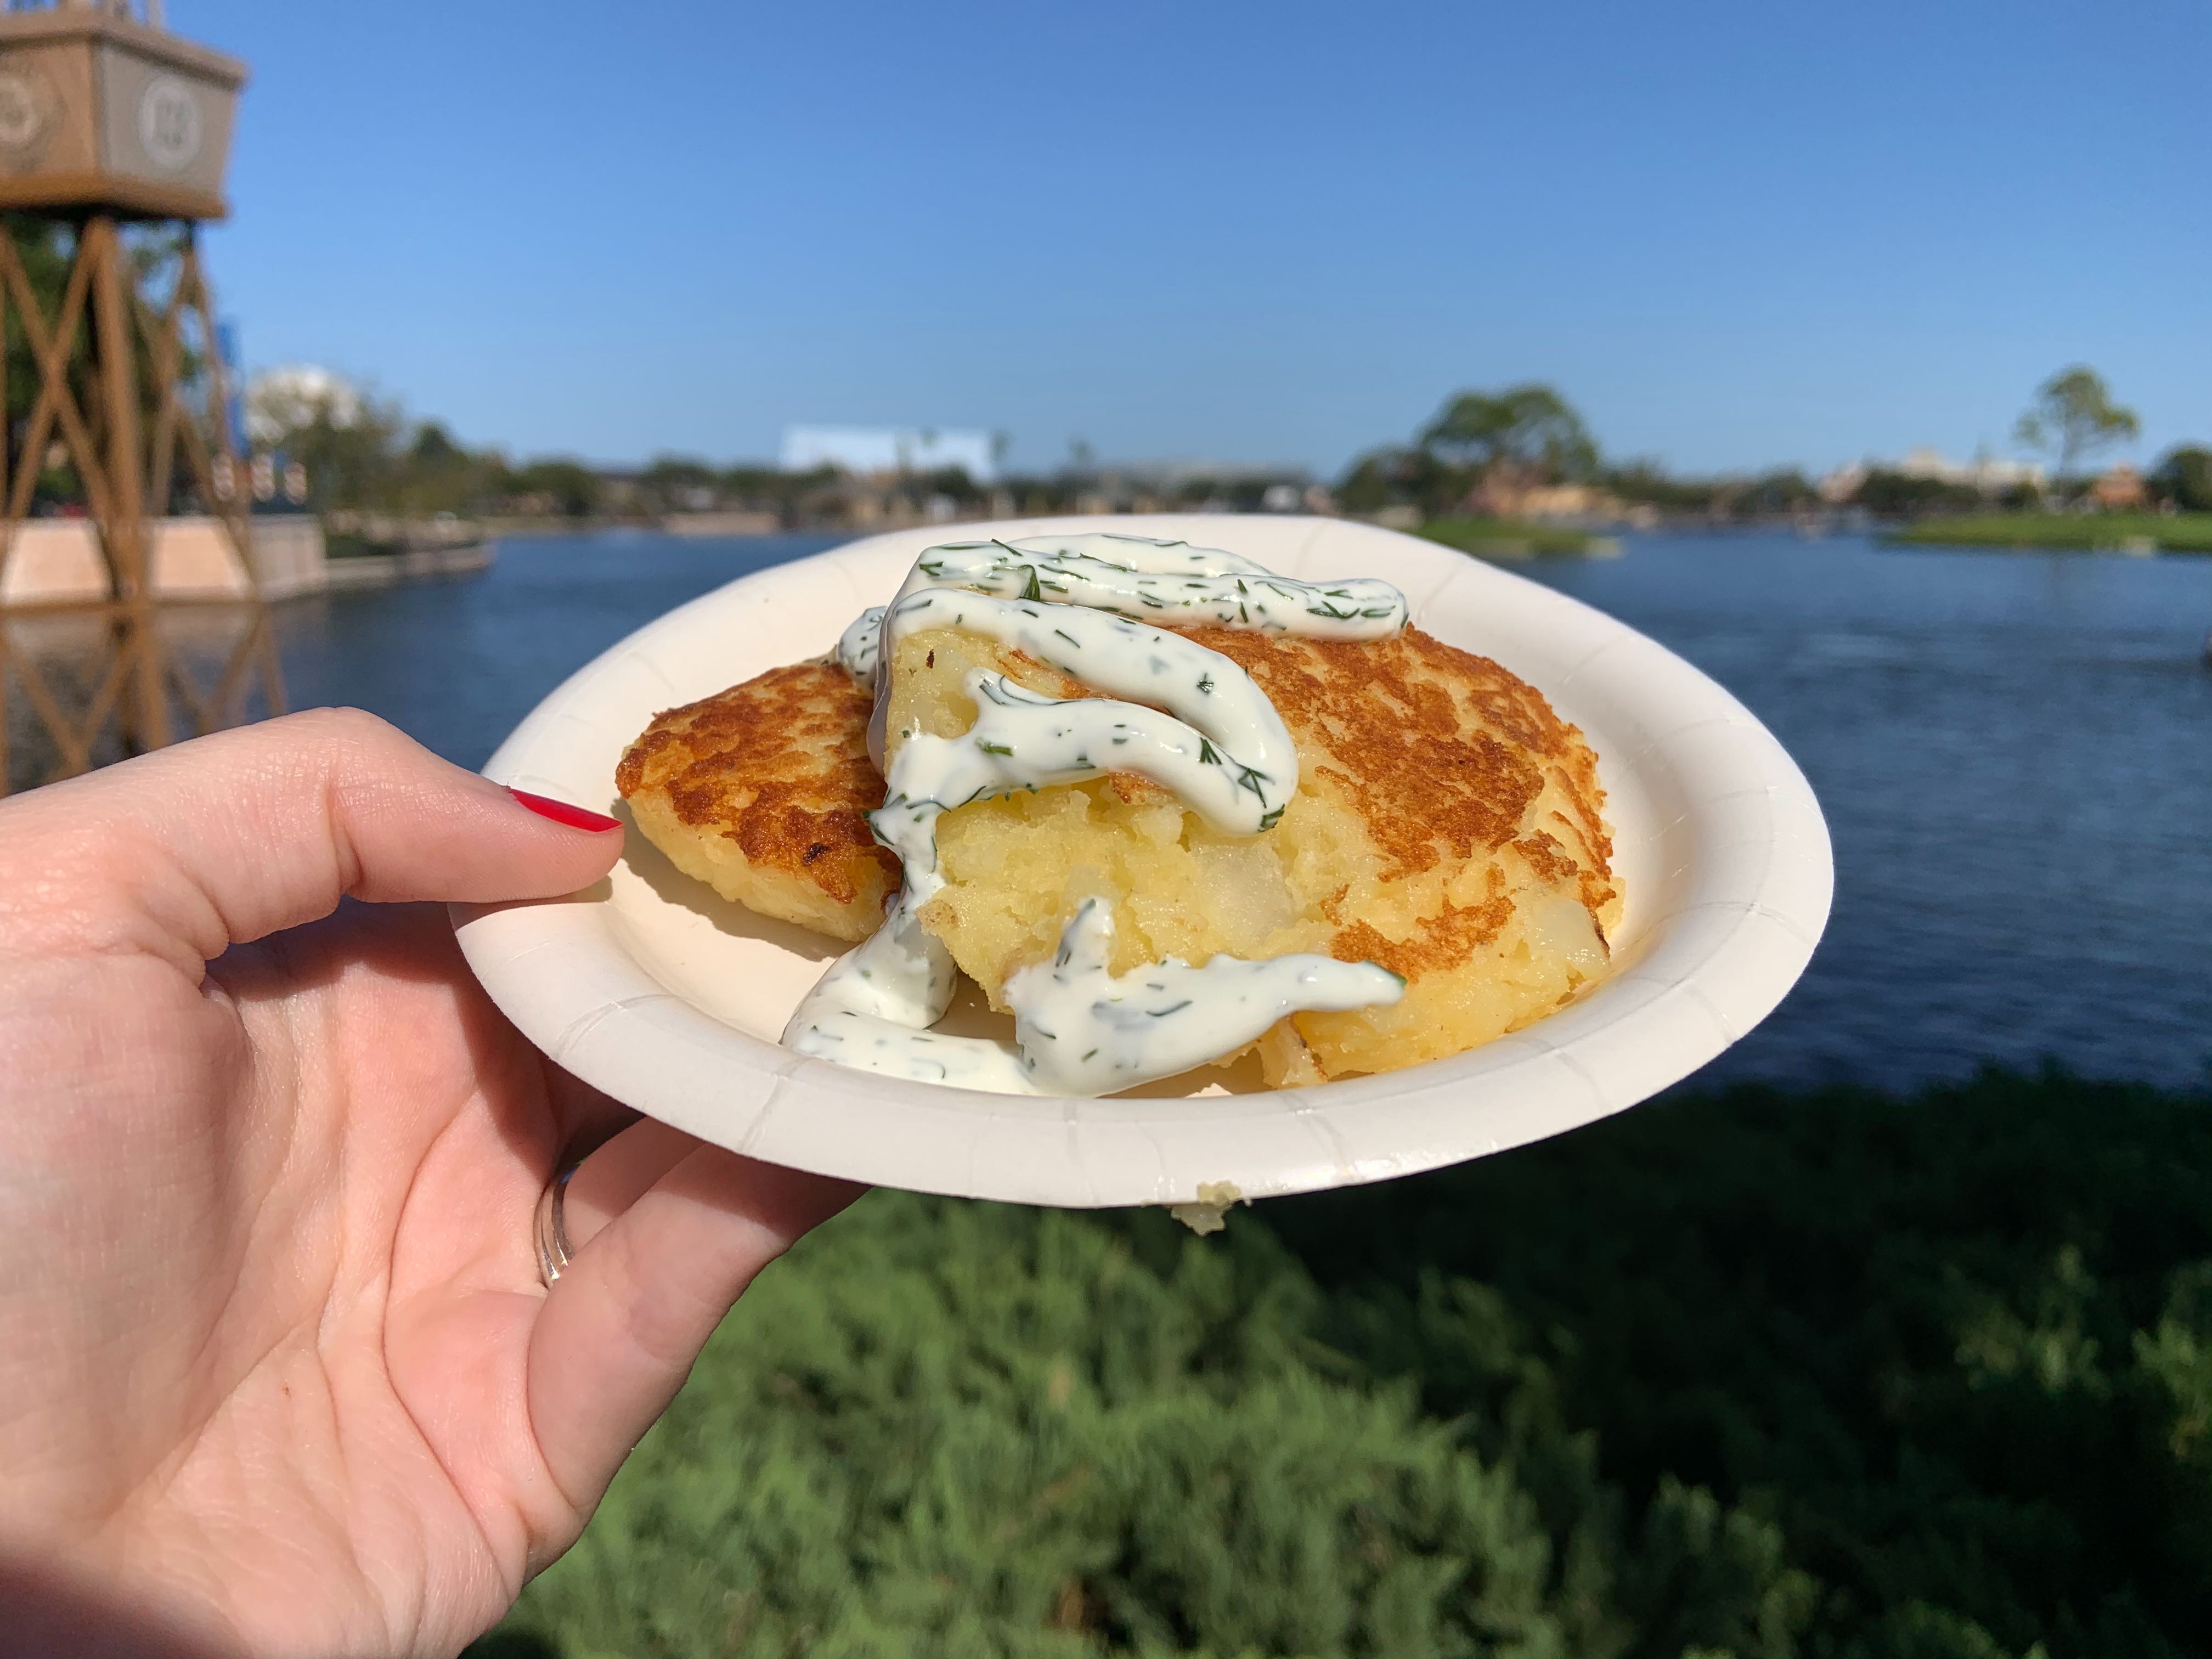 *NEW* Potato Latkes with Sour Cream – $3.75